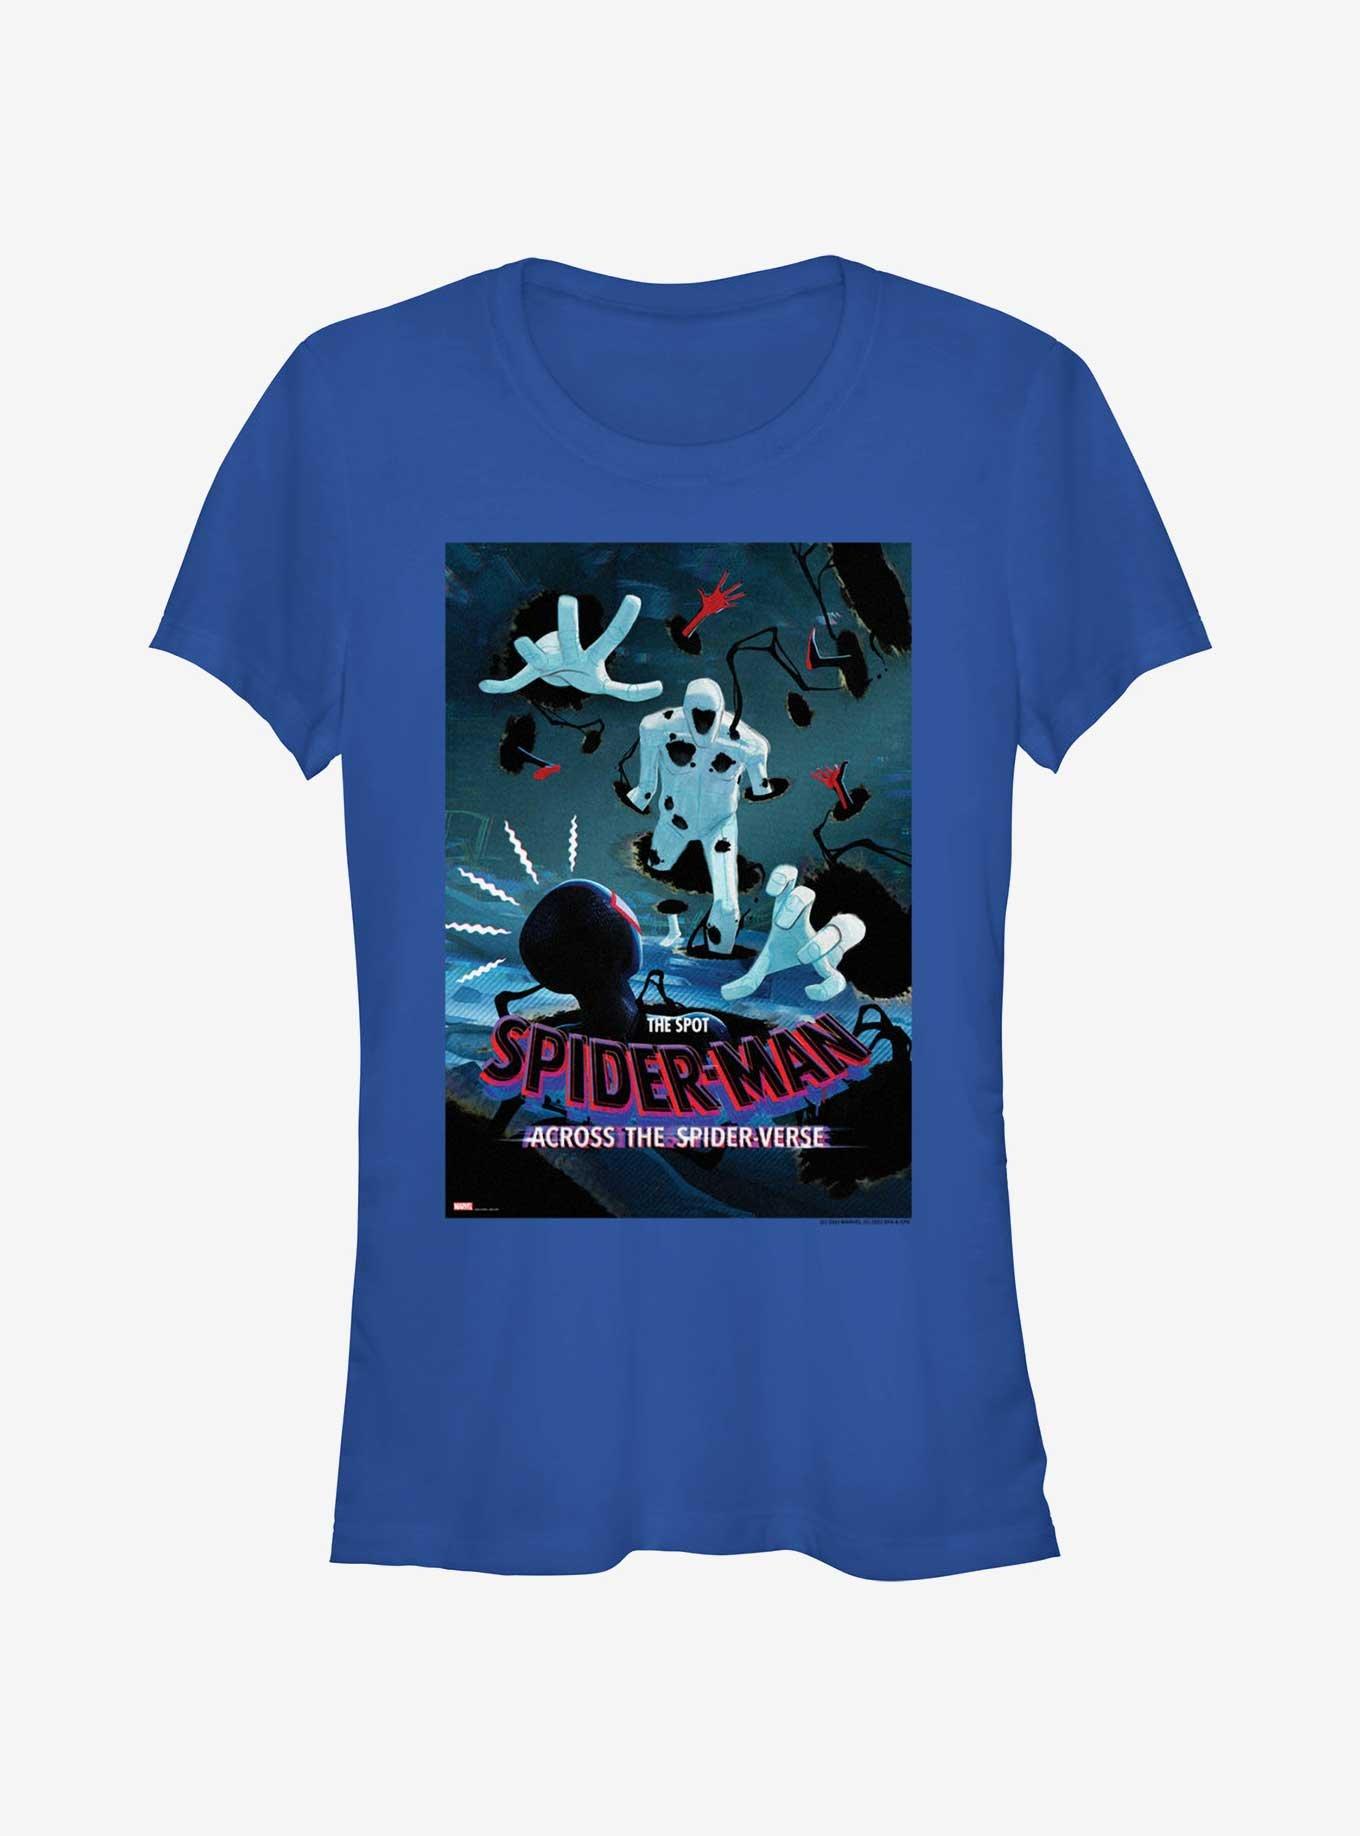 Spider-Man Vs The Spot Girls T-Shirt